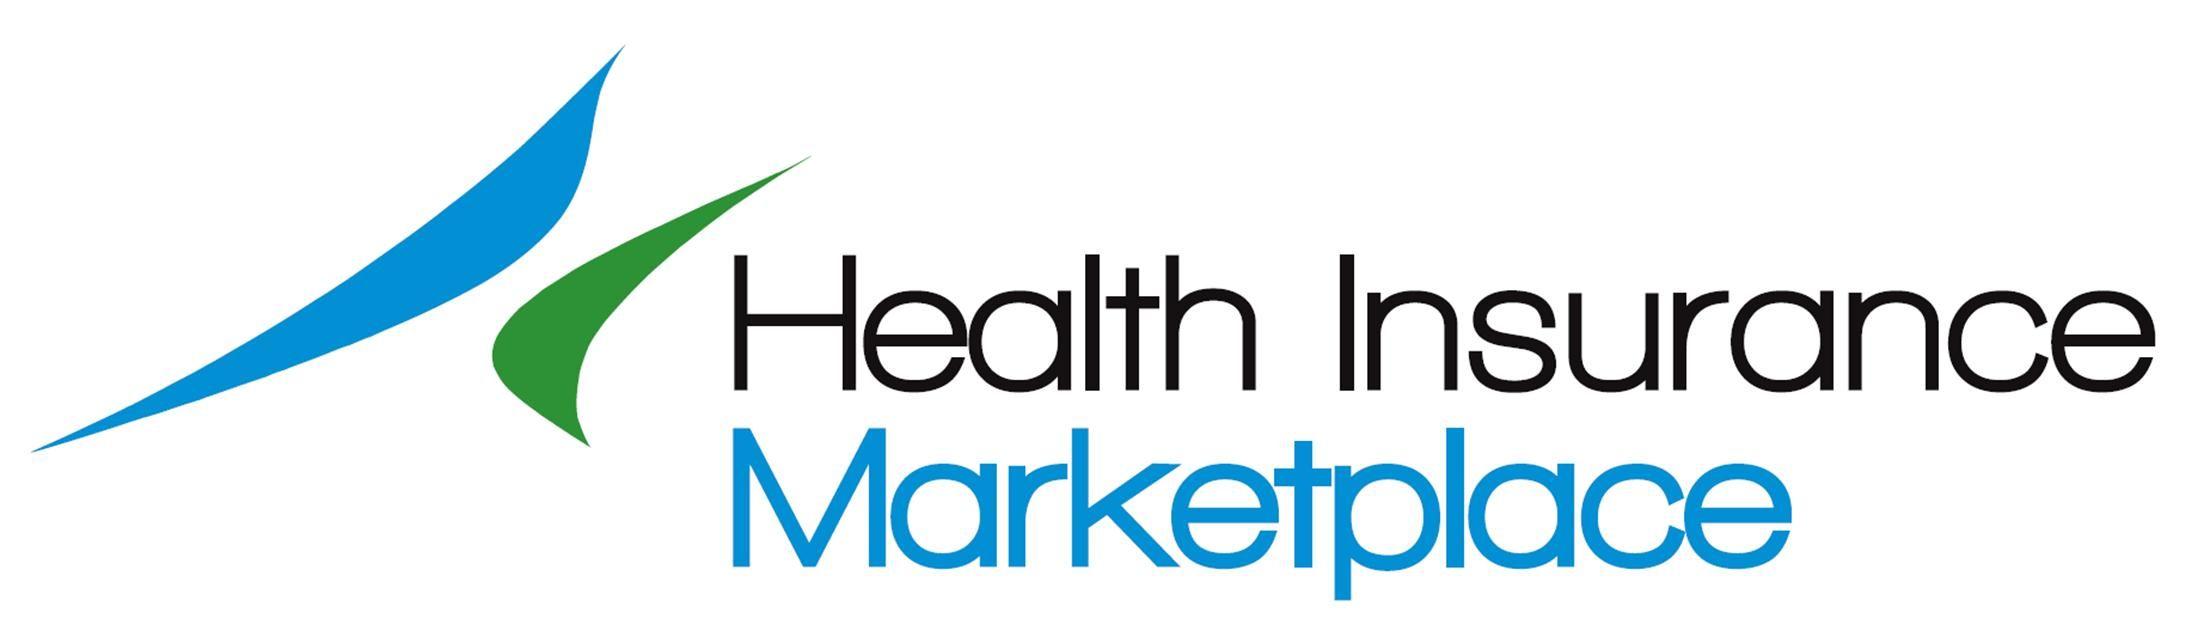 Marketplace Logo - Health-Insurance-Marketplace-stacked-logo - Goodwin Community Health